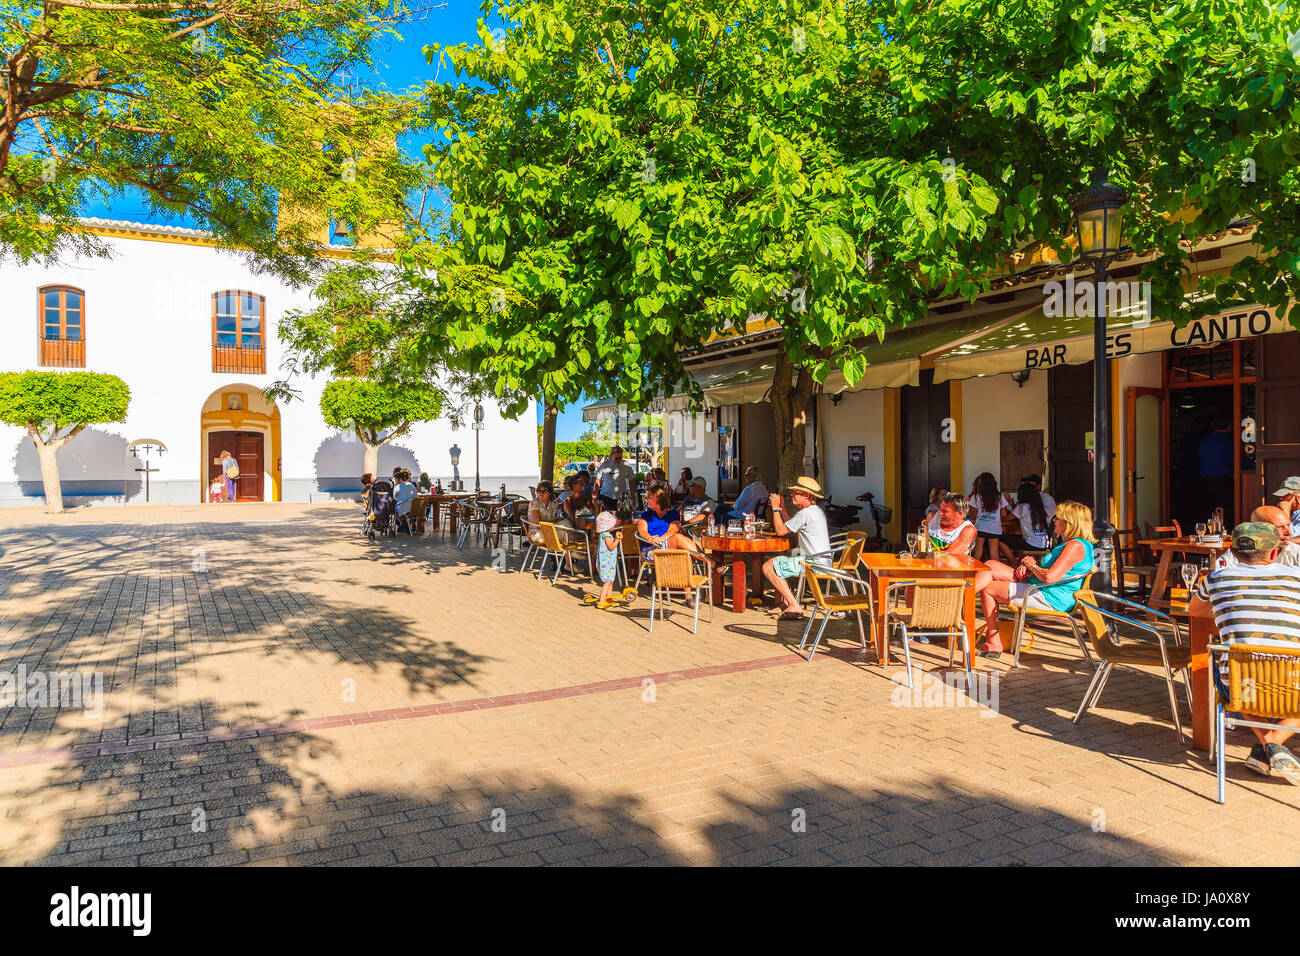 SANTA GERTRUDIS DE FRUTERA, IBIZA ISLAND - MAY 19, 2017: people sitting outdoors in restaurants on church square in Santa Getrudis town on Ibiza islan Stock Photo